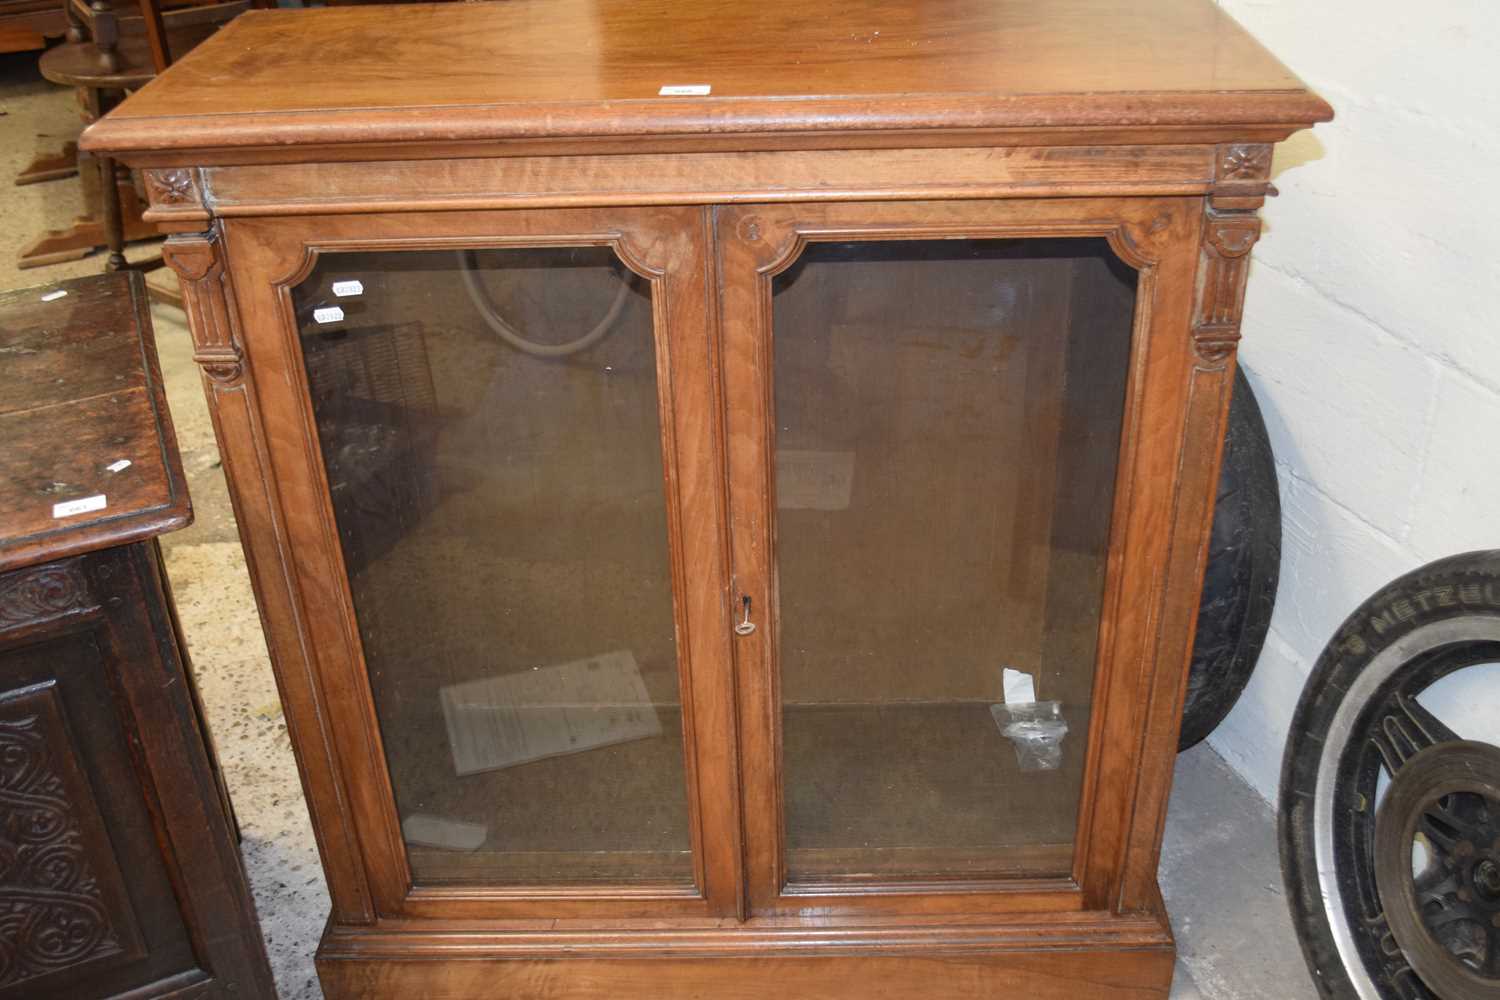 Victorian faded walnut veneered two door bookcase cabinet on plinth base,98cm wide